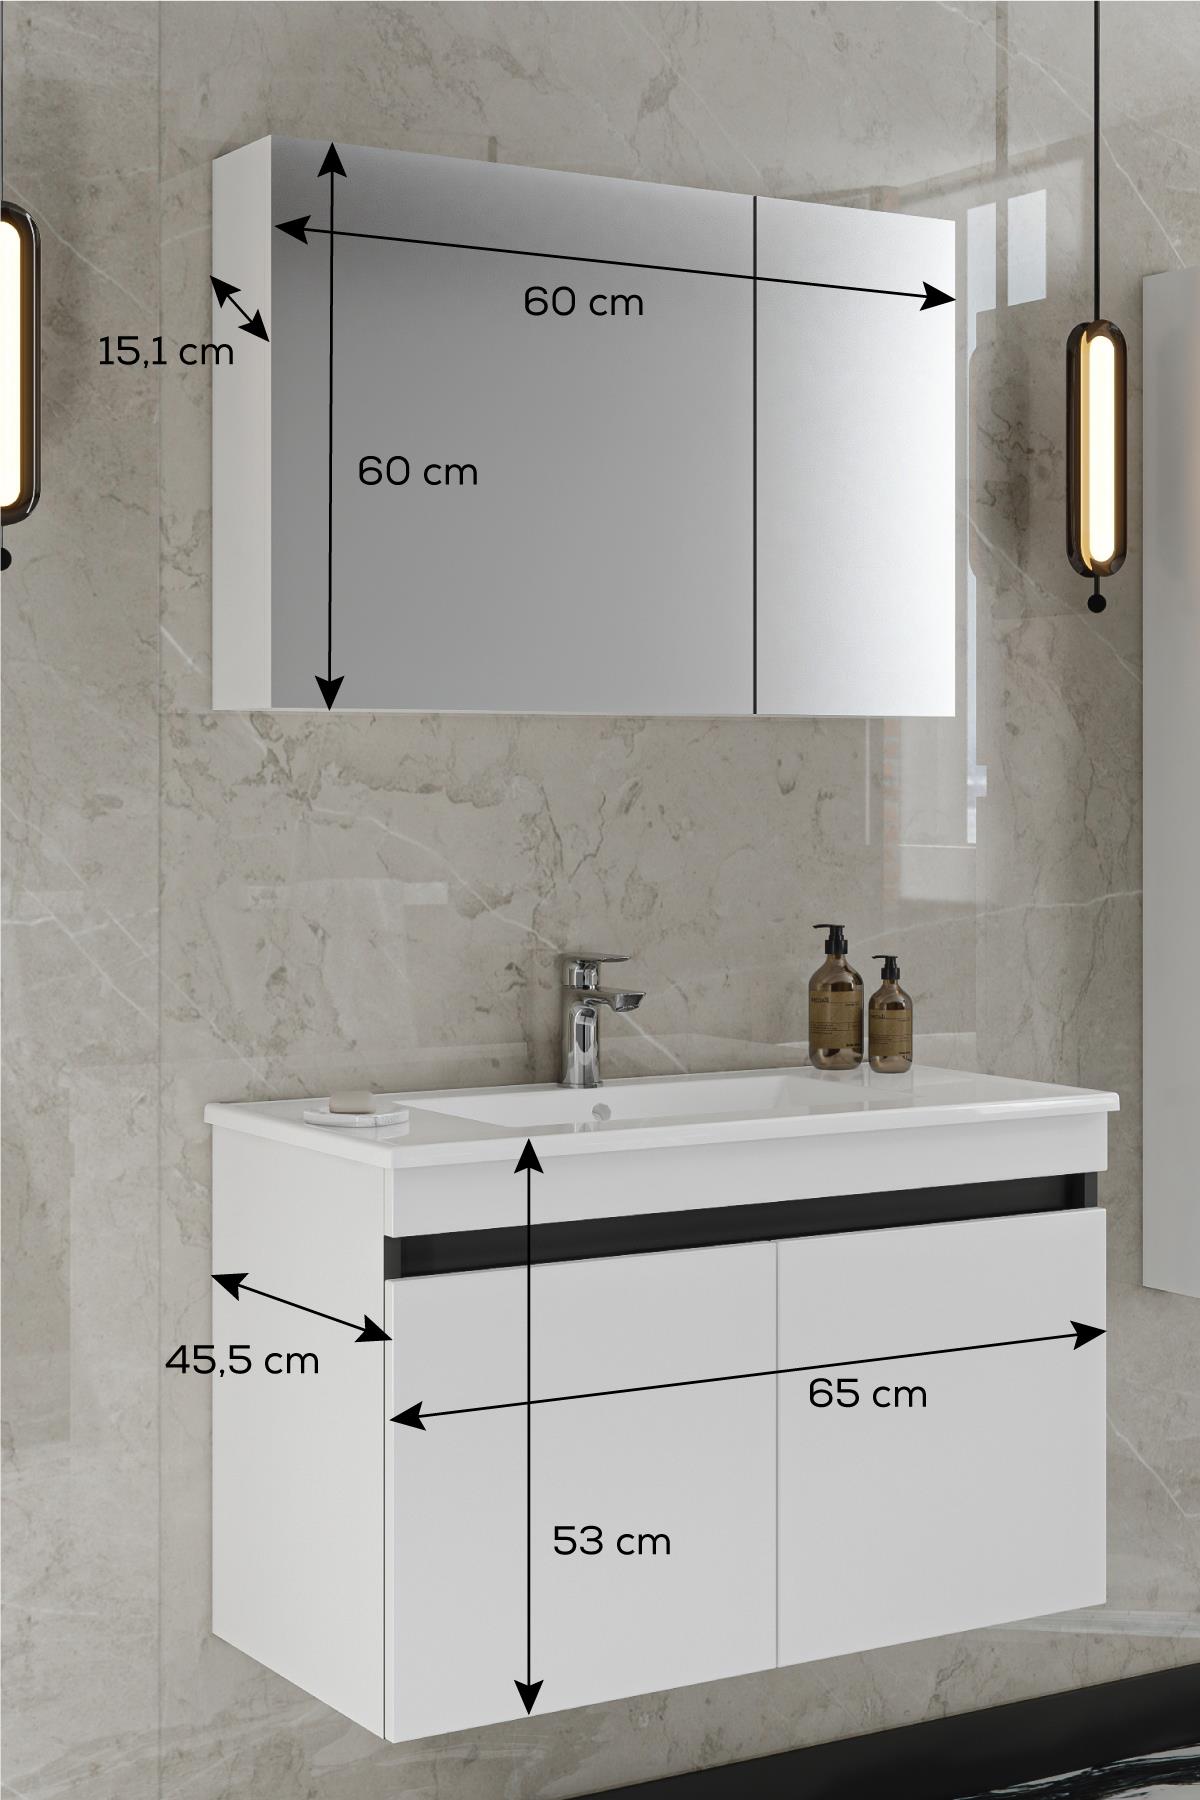 Banyo Idil 65 Cm Banyo Dolabı Aynalı Dolaplı Üst Dolap Lavabo - Balneom